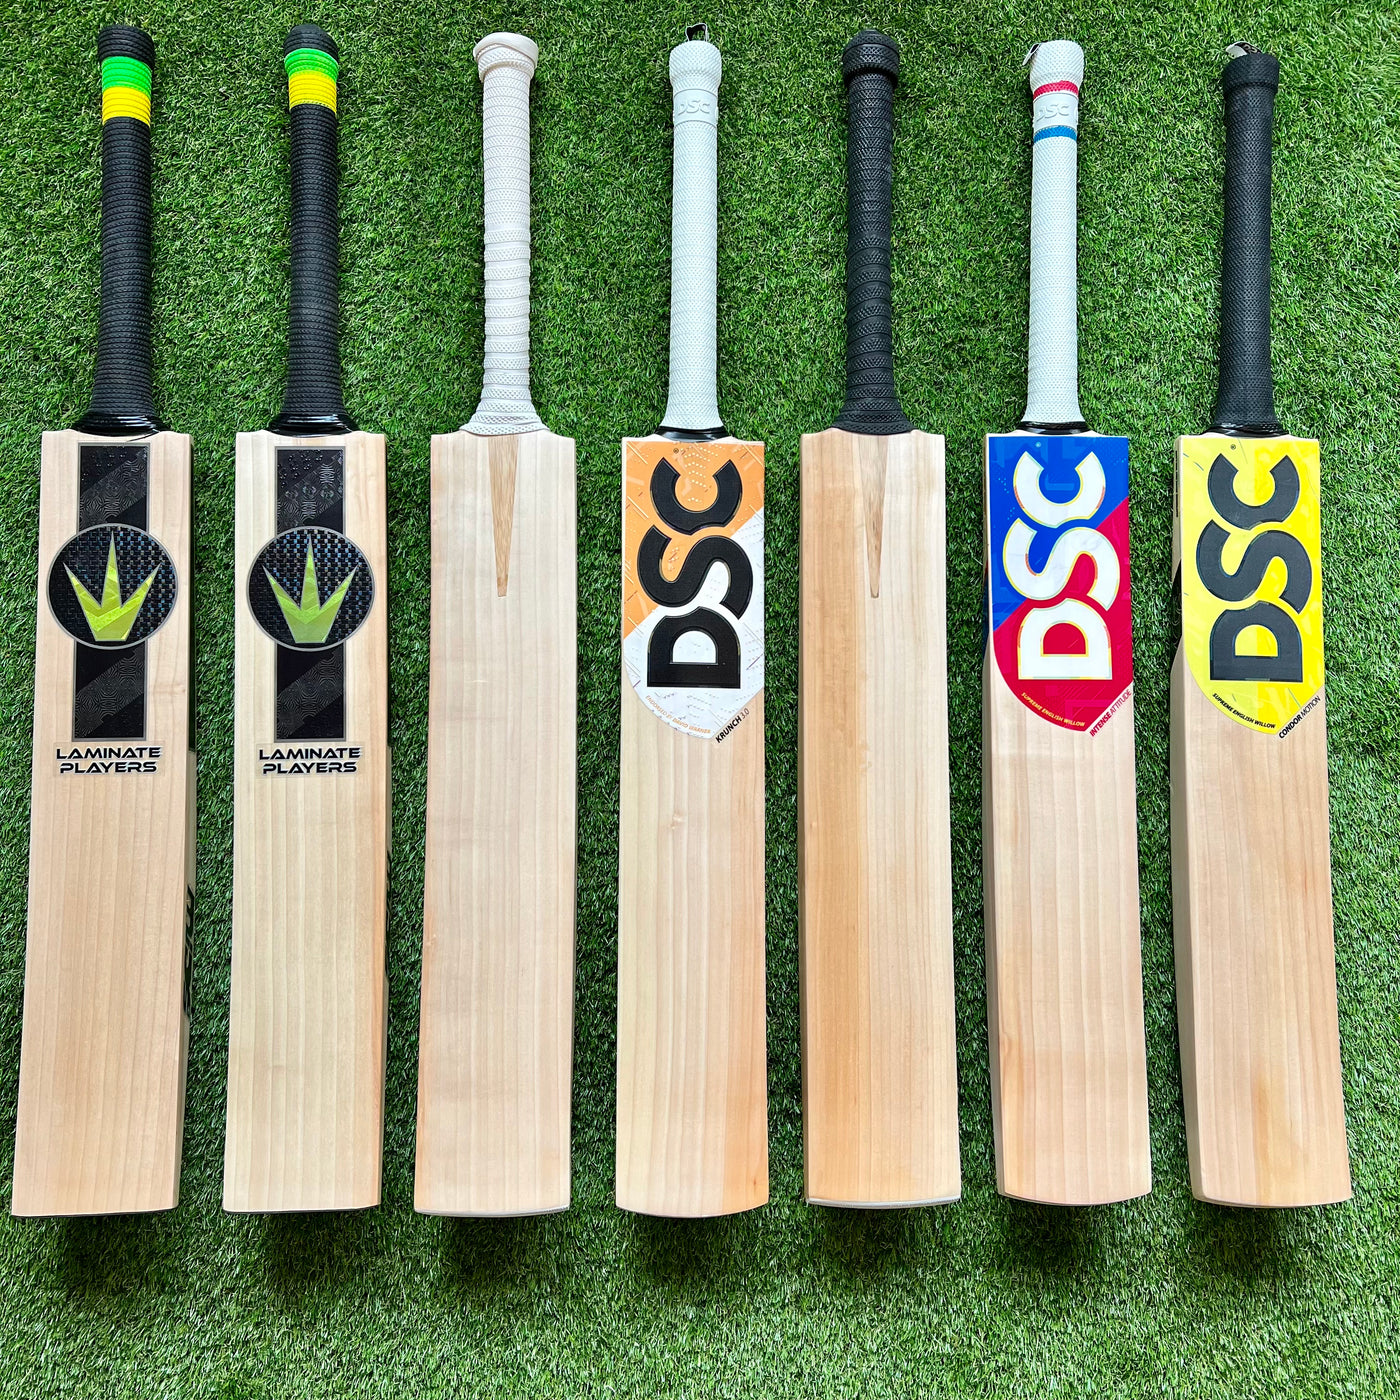 Ceat Cricket | CP Cricket | Plain Cricket Bats | Keeley Cricket